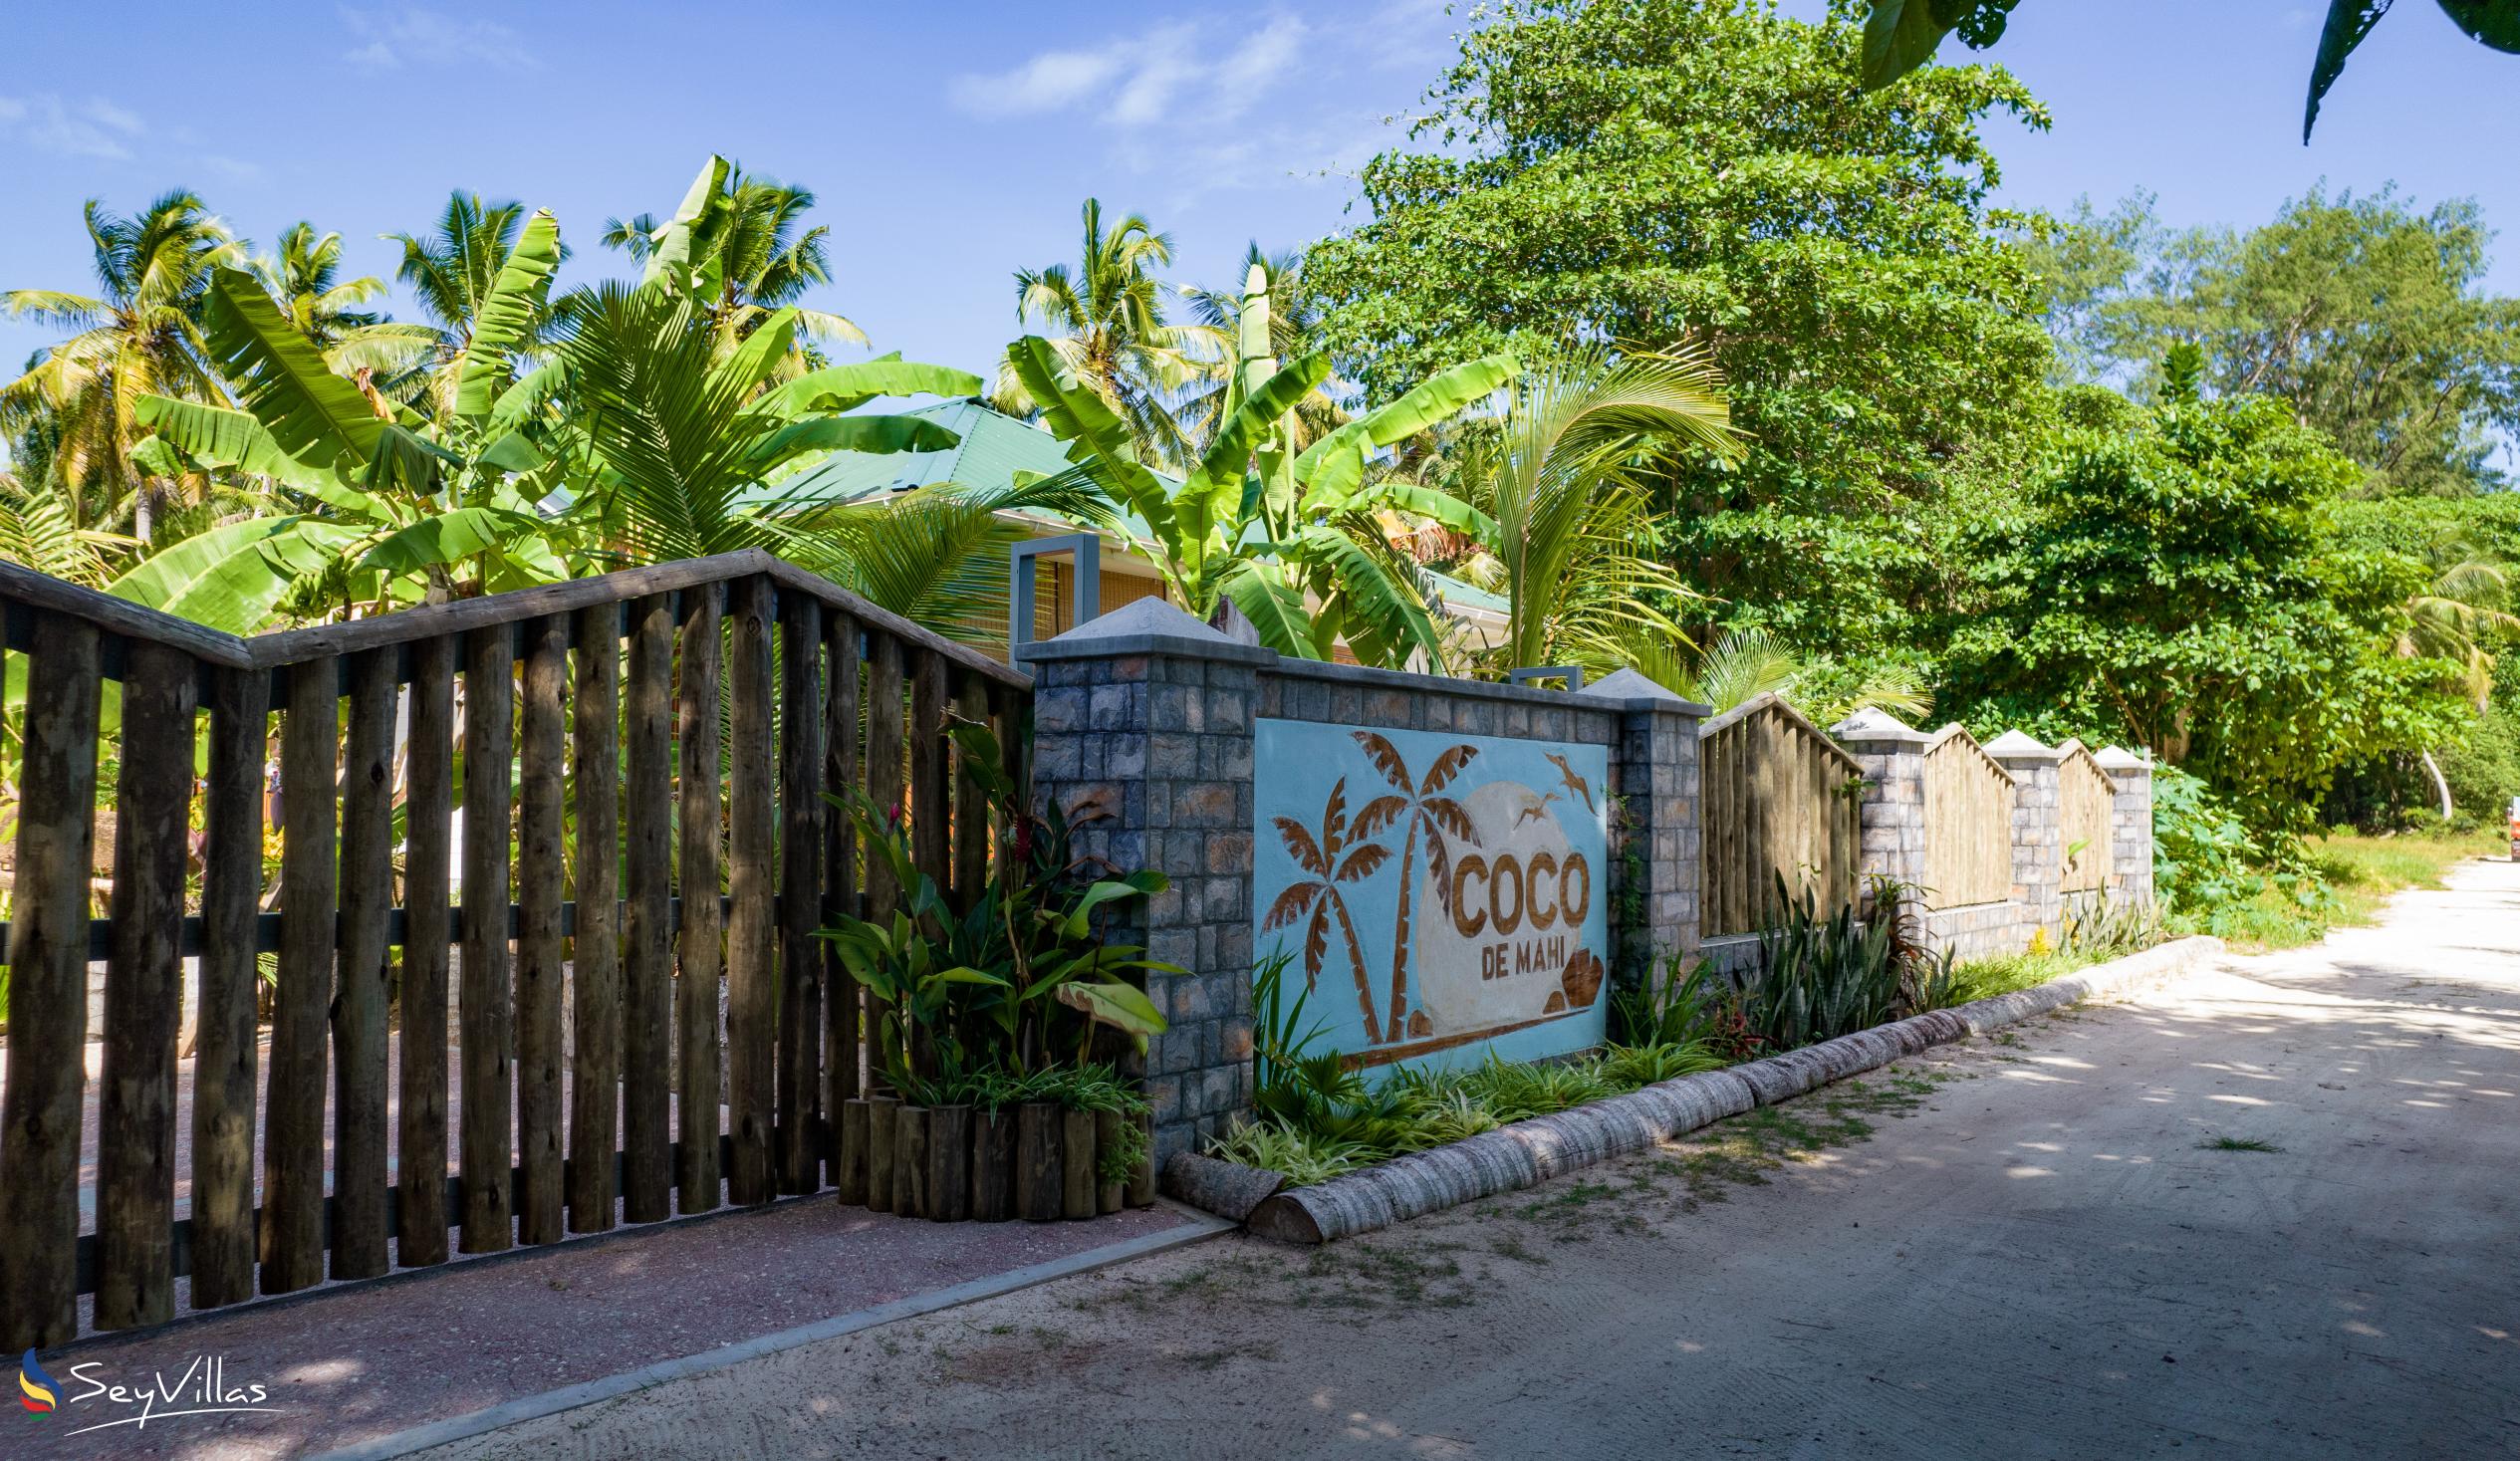 Photo 31: Coco de Mahi - Location - La Digue (Seychelles)